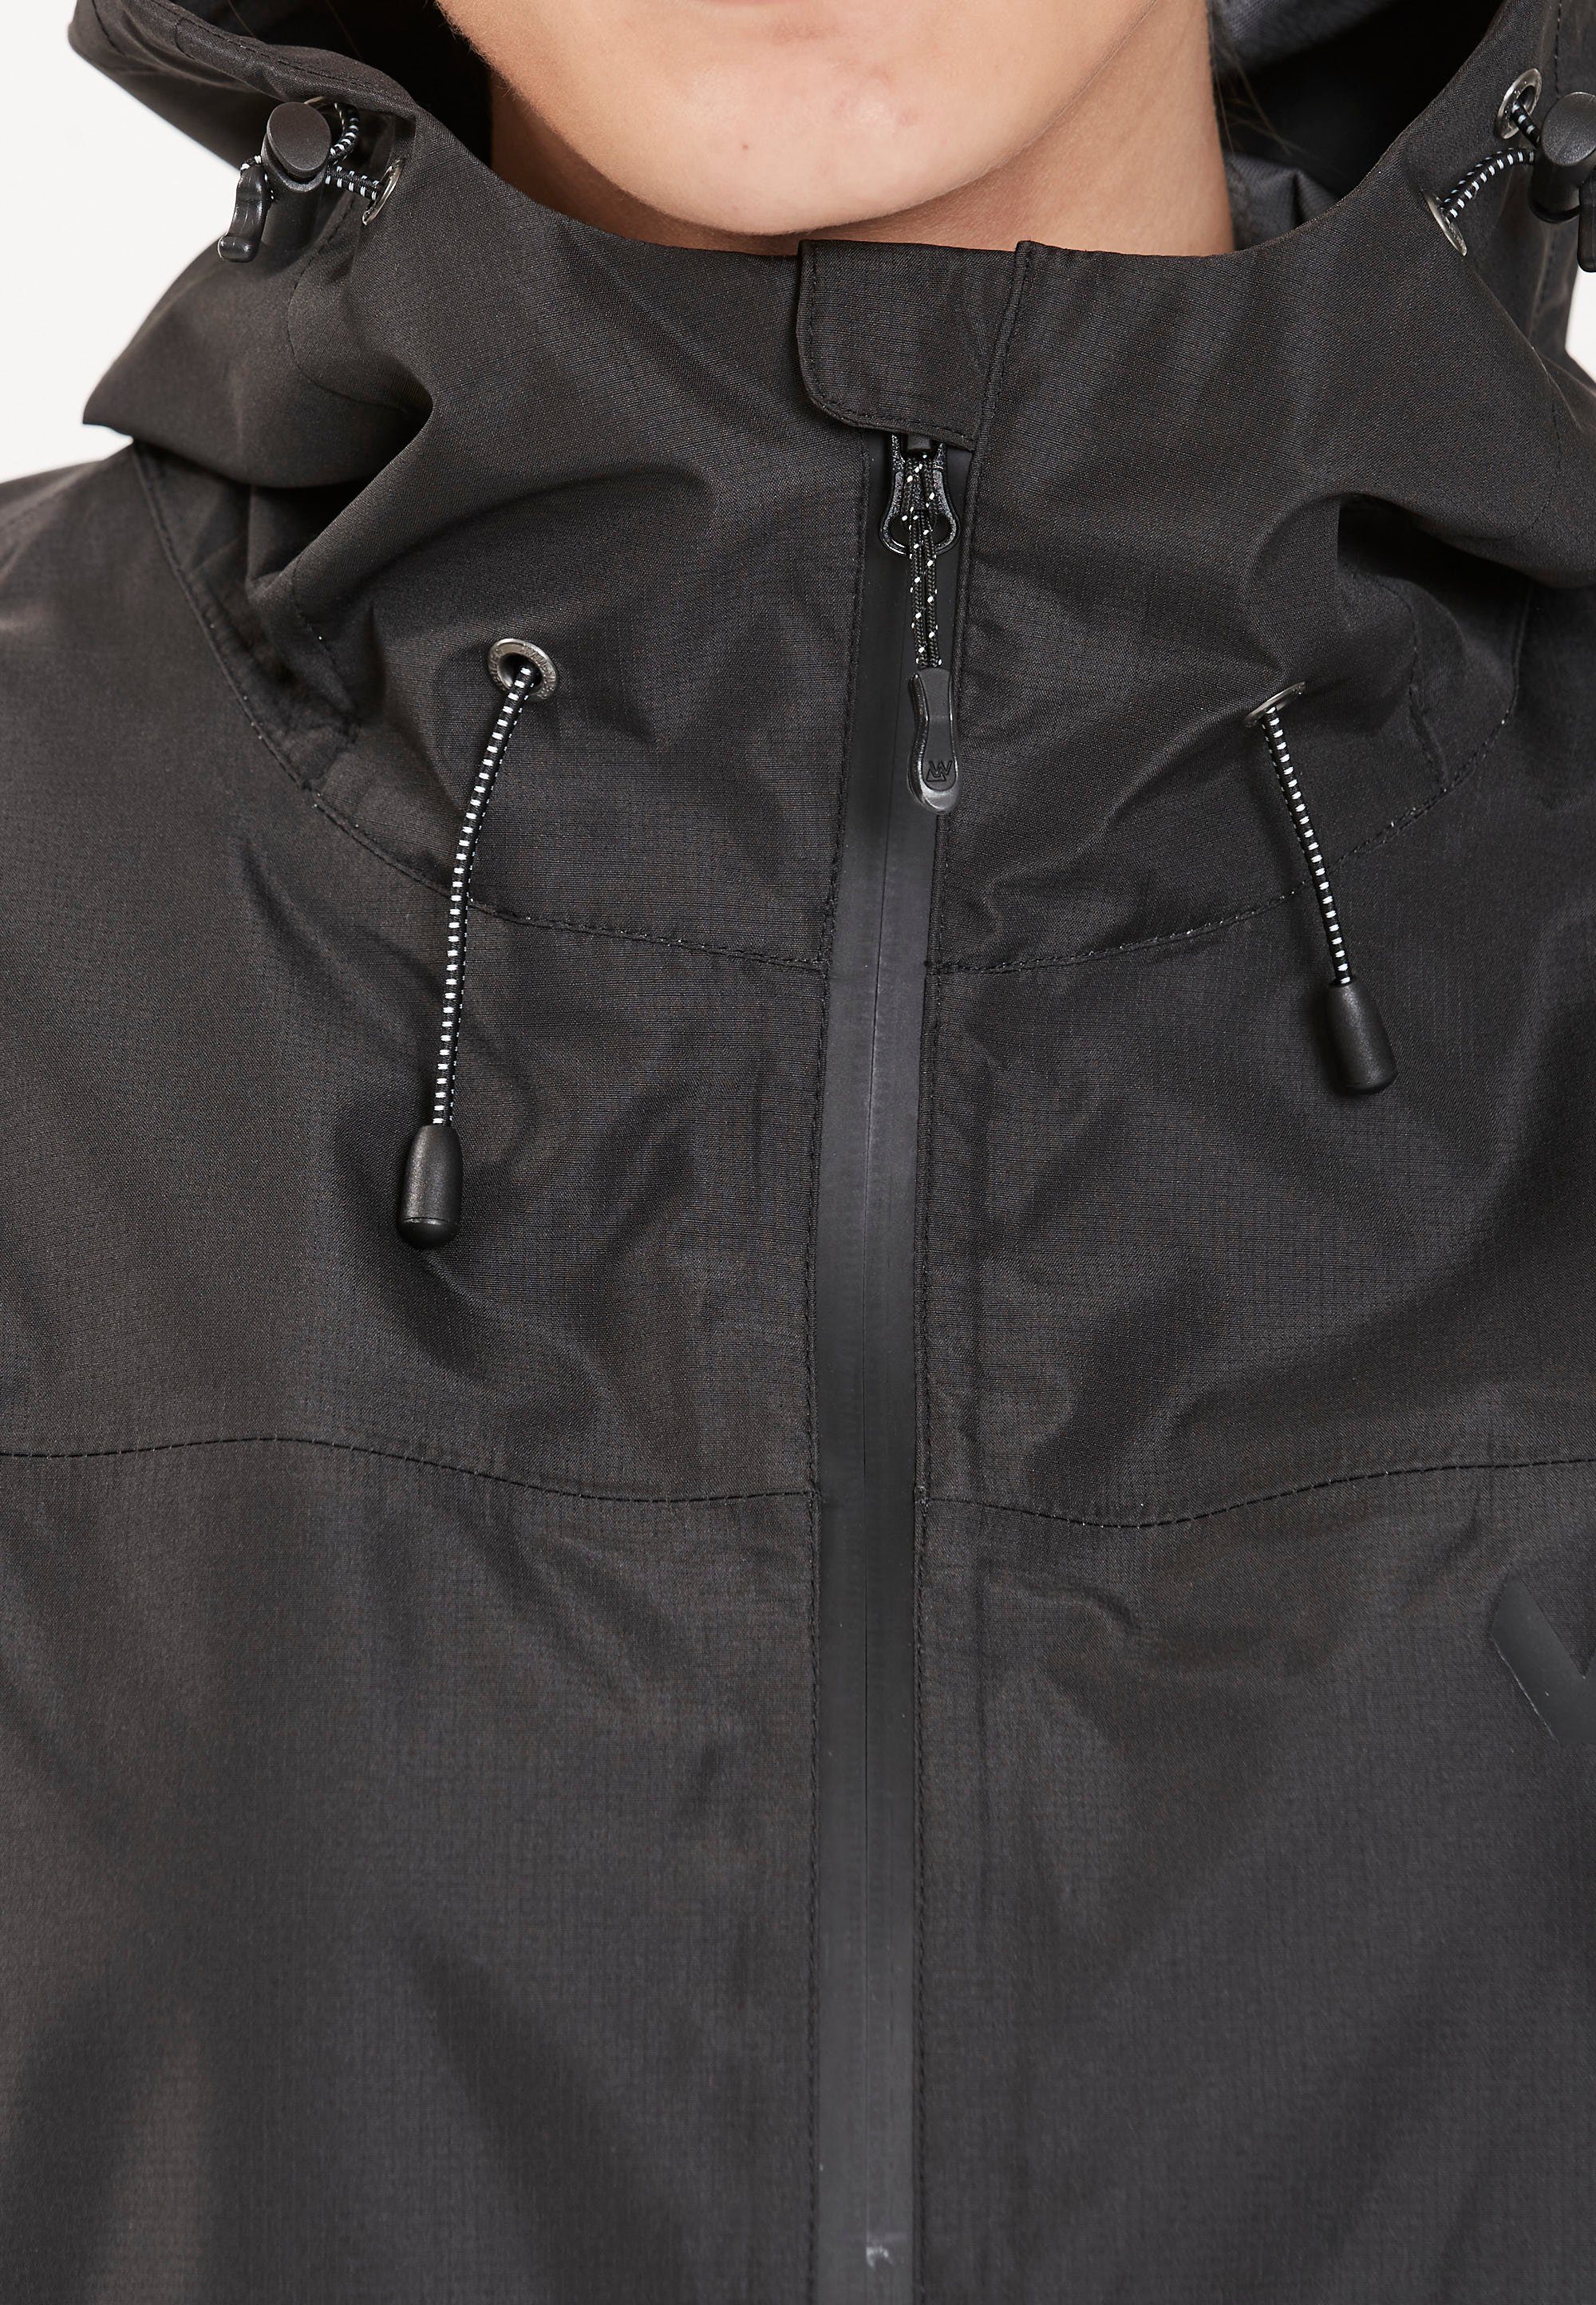 Jacket praktischer WHISTLER Shell 15000 schwarz Kapuze W Softshelljacke BROOK W-PRO mit